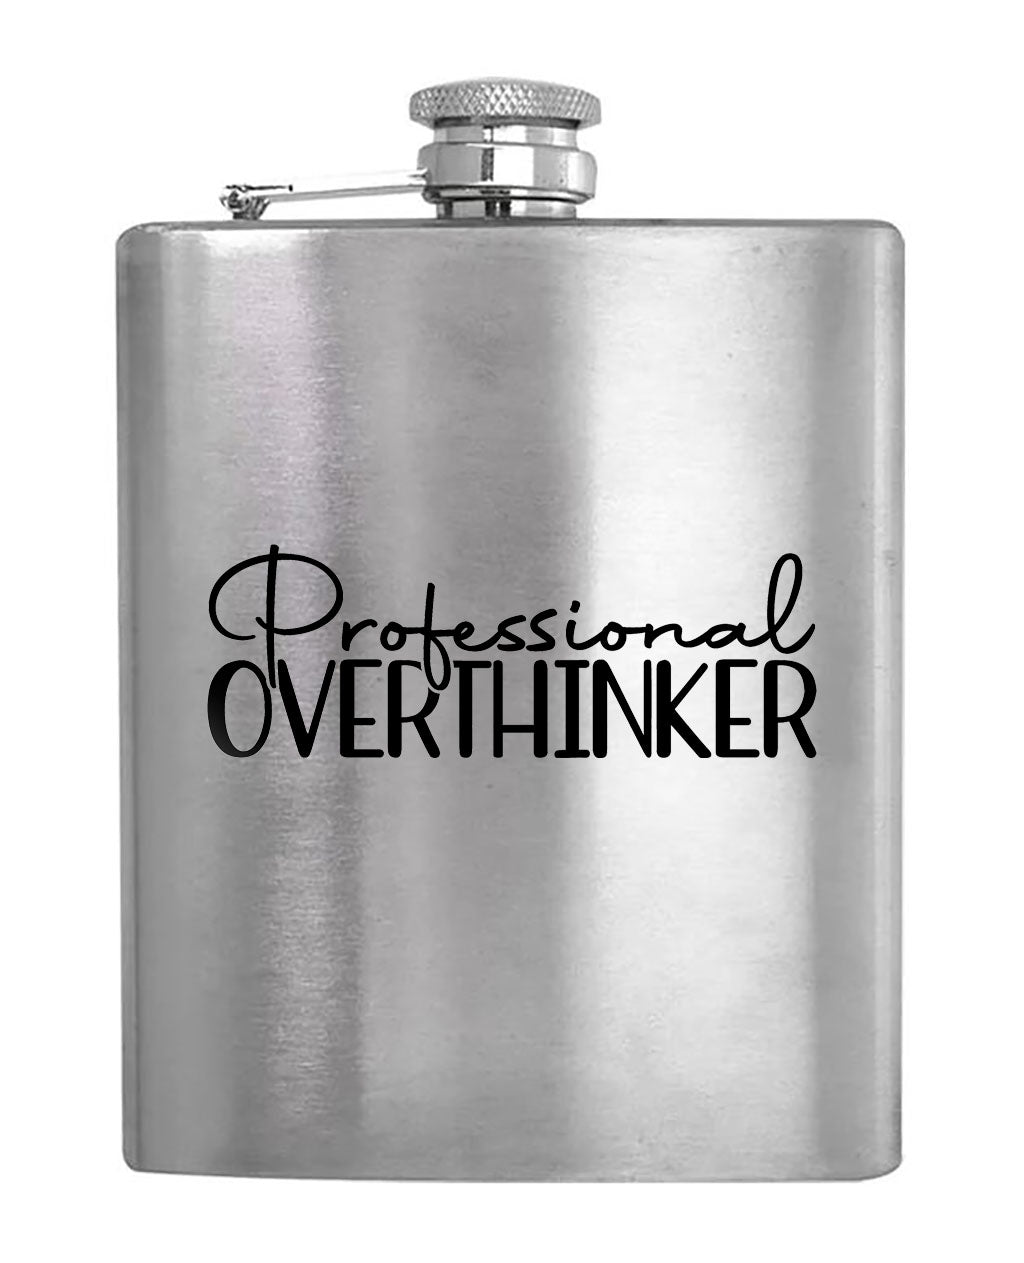 Professional Overthinker - Hip Flask